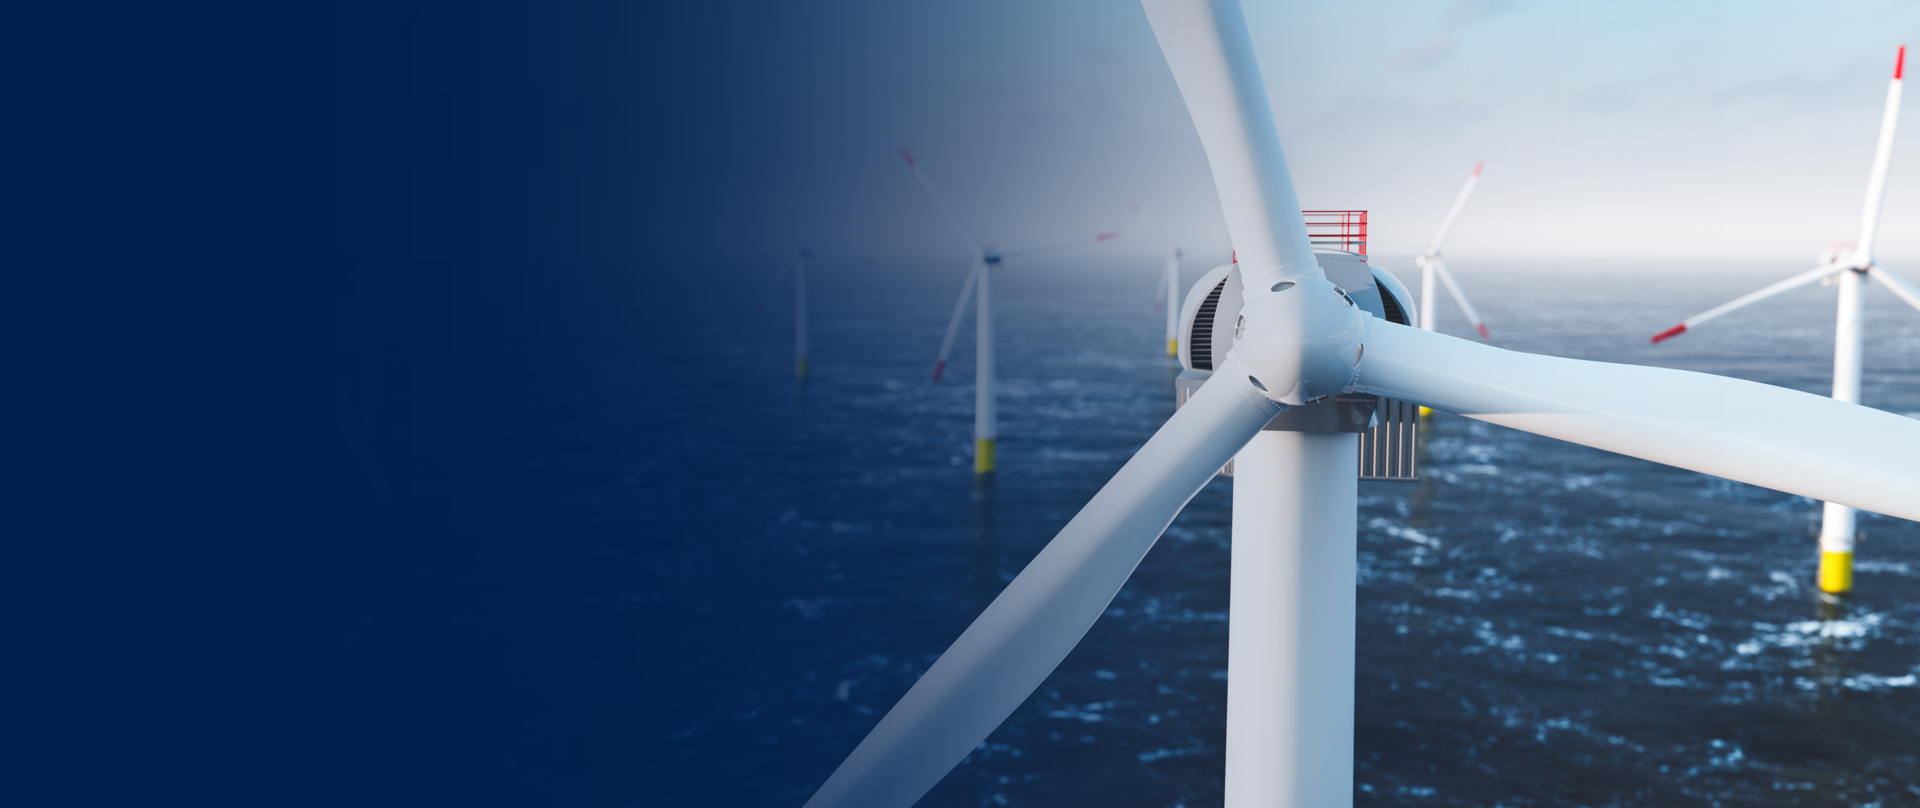 Wind Energy industry header image consisting of wind turbine